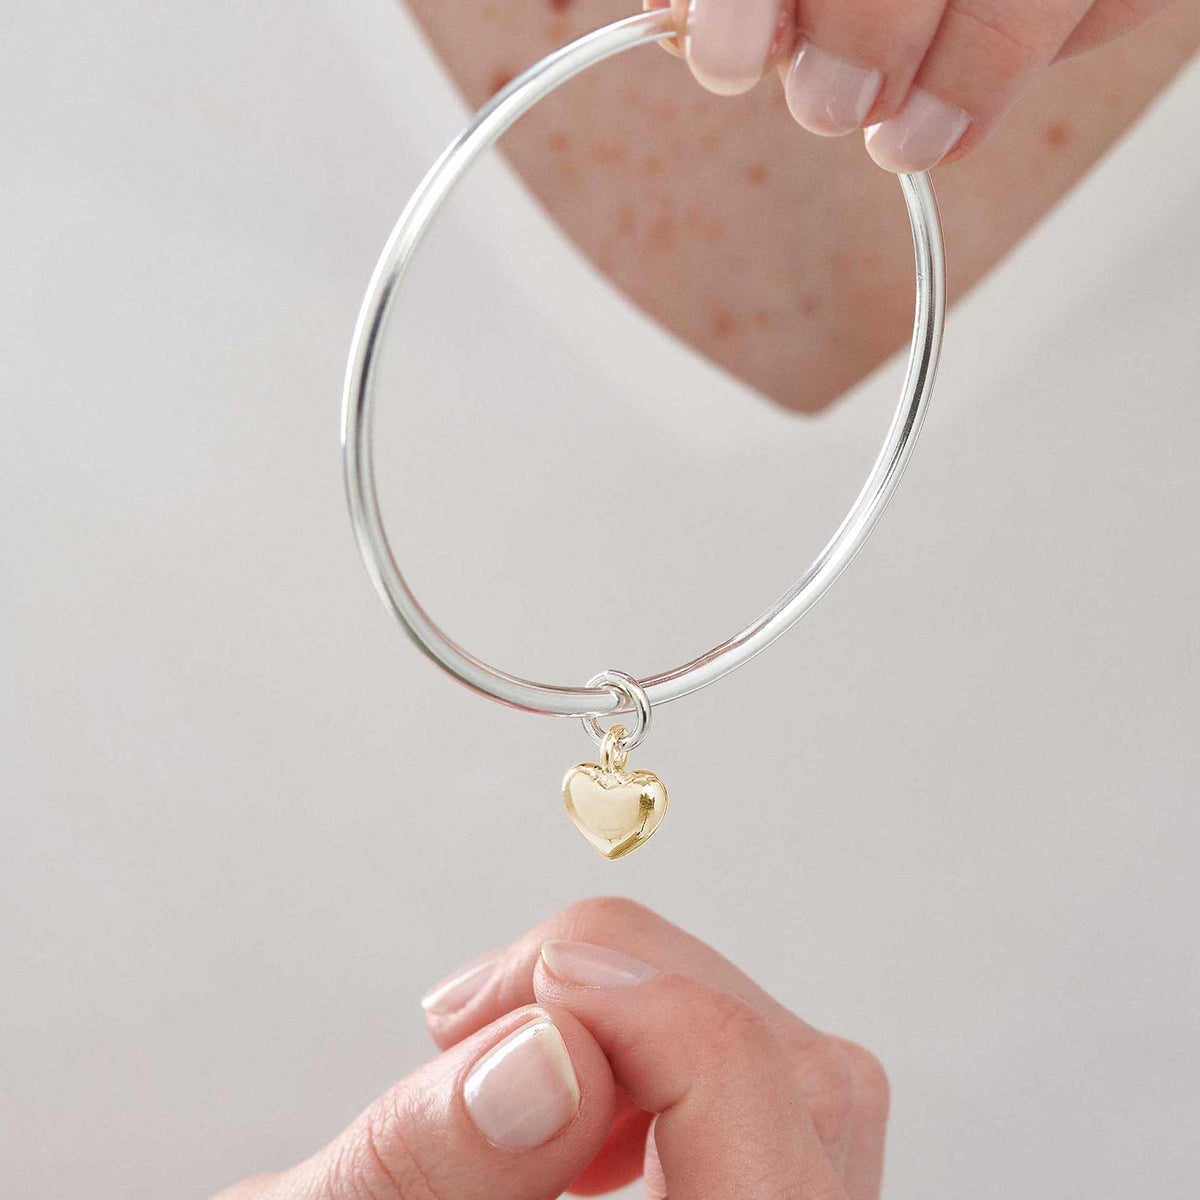 silver and solid gold heart bangle bracelet for women designer jewellery made in UK forever heart